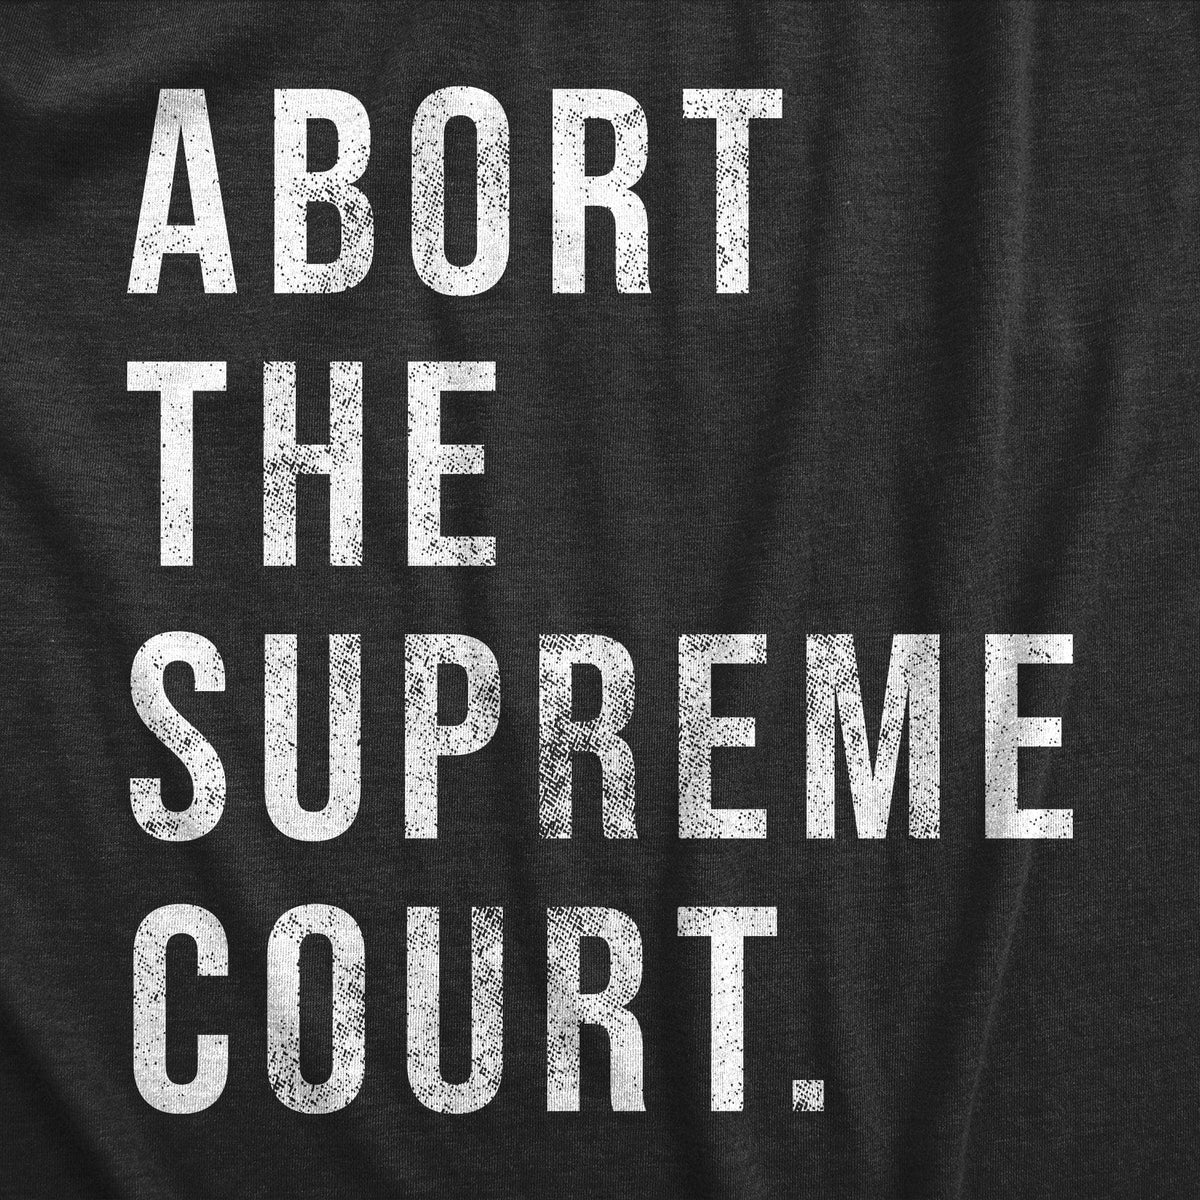 Abort The Supreme Court Women&#39;s Tshirt  -  Crazy Dog T-Shirts